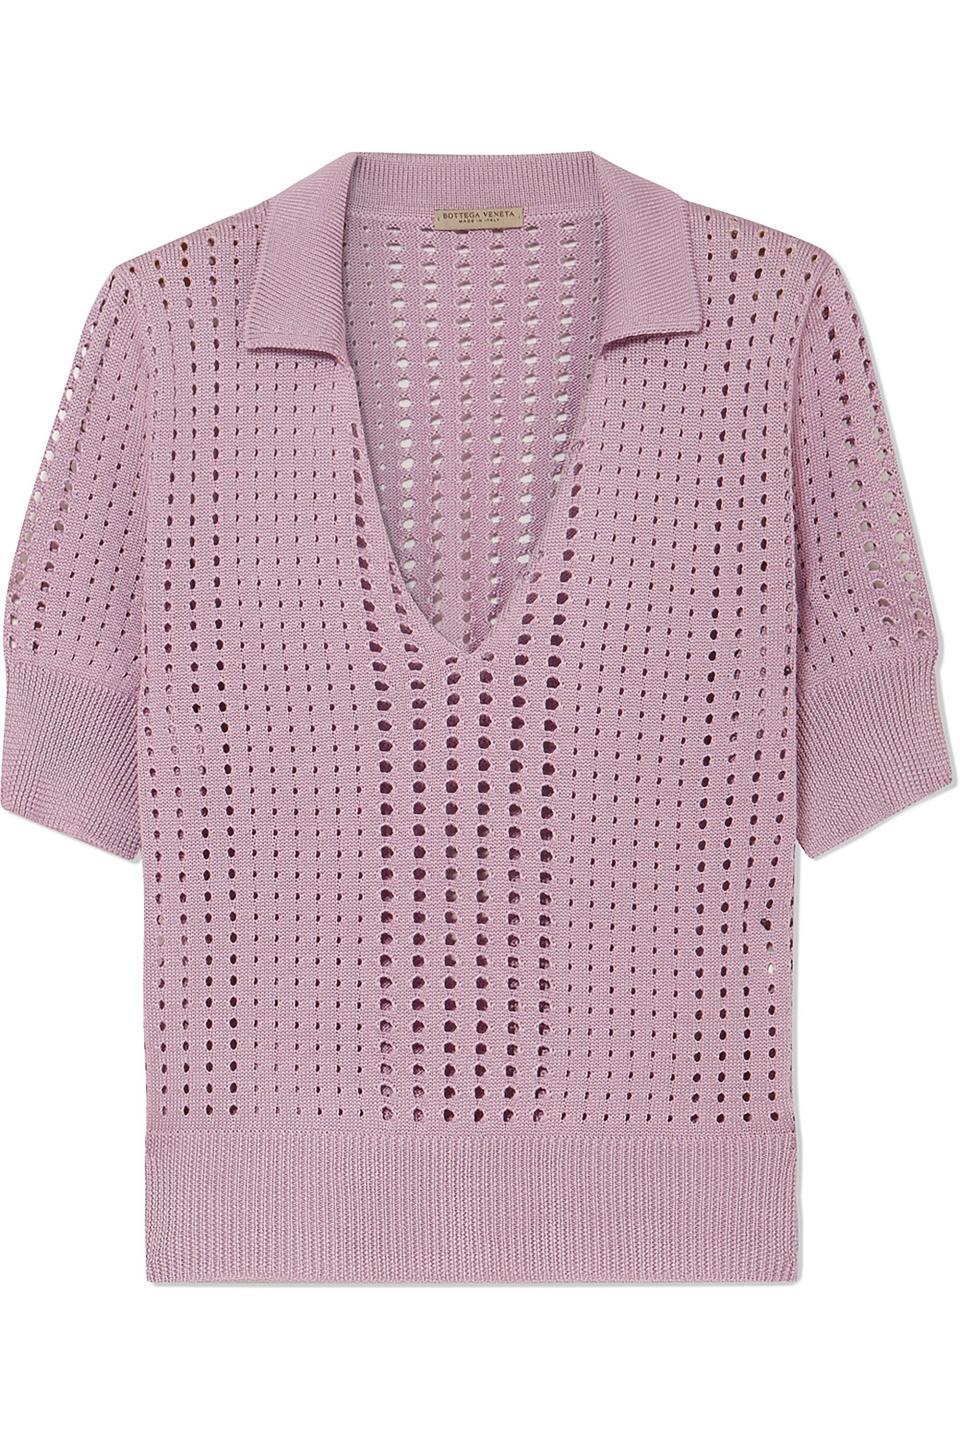 Bottega Veneta pointelle-knit silk top (£535)